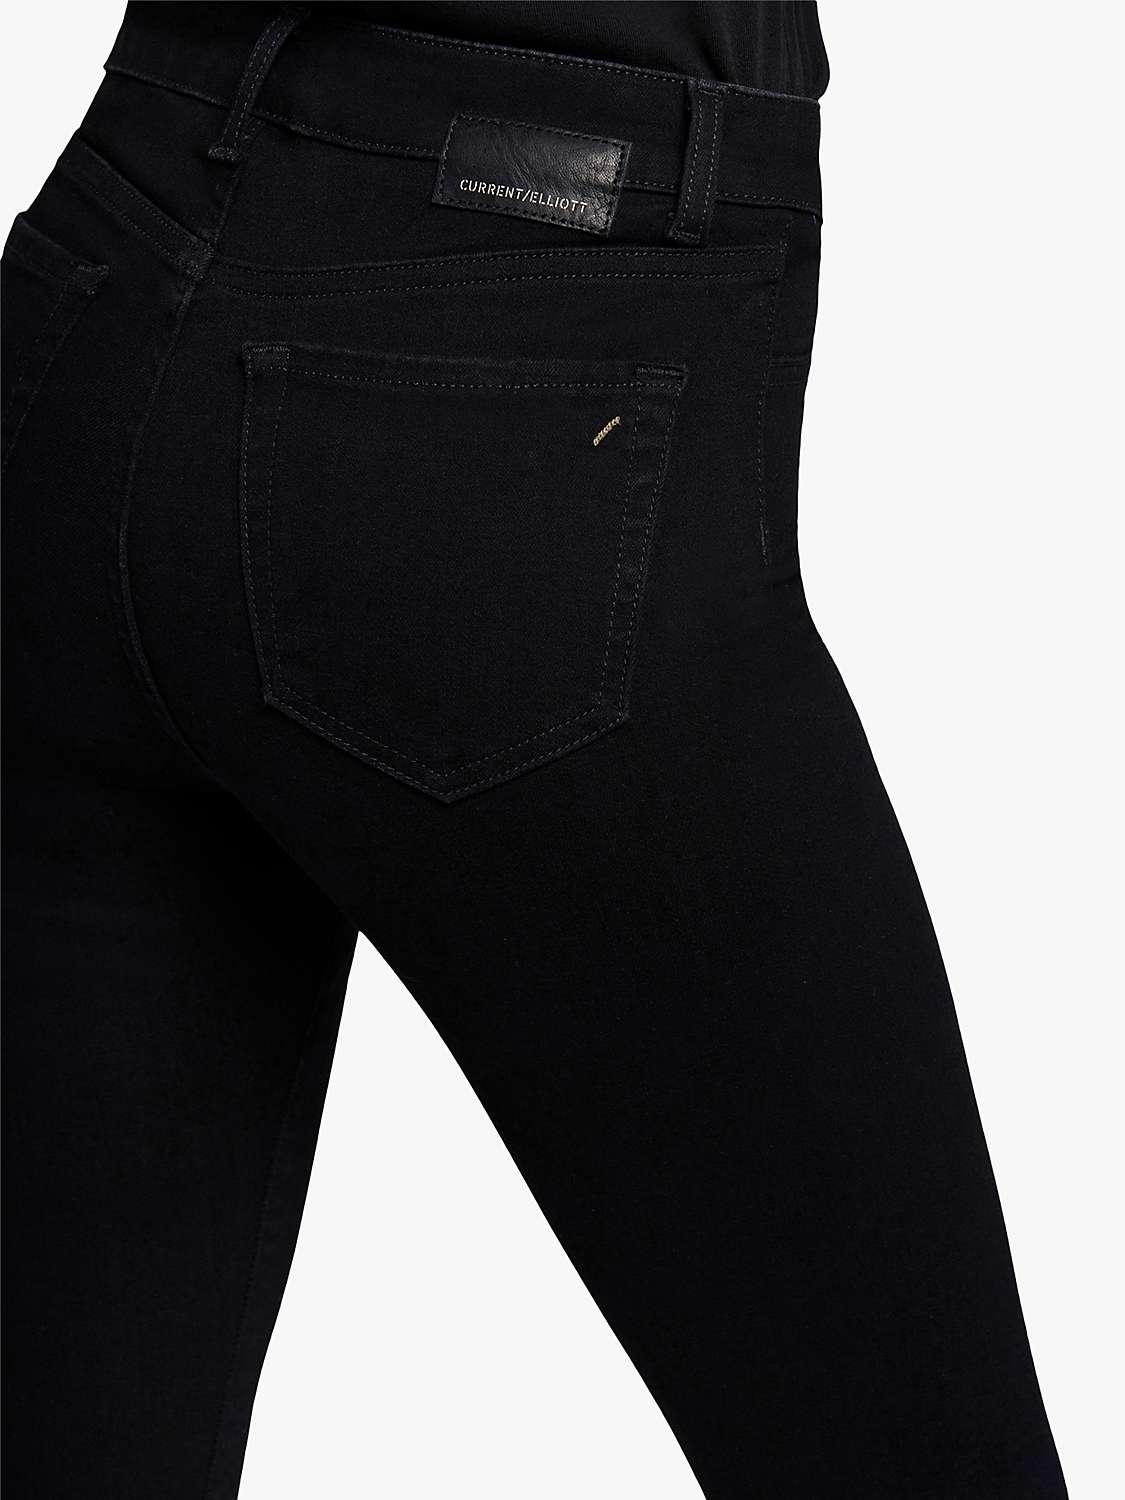 Buy Current/Elliott The Borderline Mid Rise Skinny Jeans Online at johnlewis.com